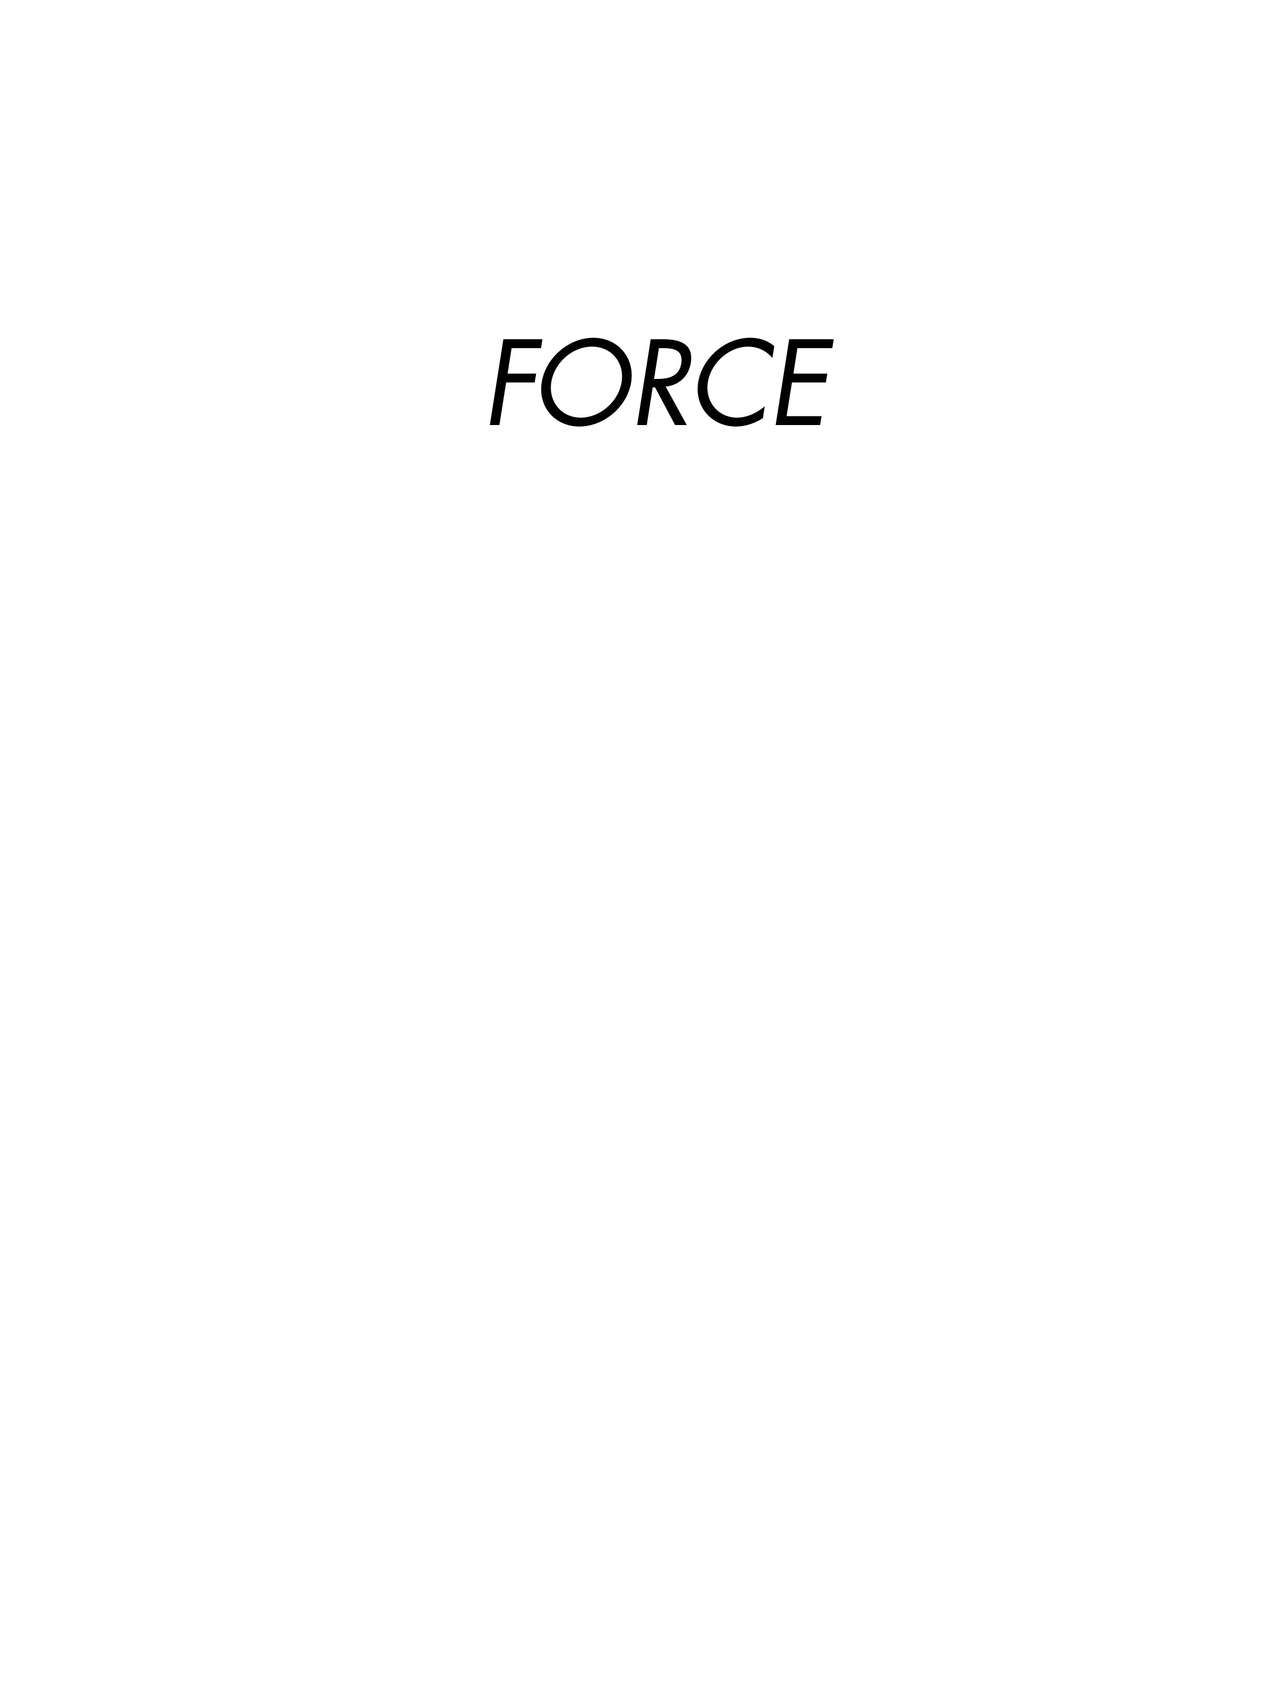 FORCE Dynamic Life Drawing 10th Anniversary Edition - Michael D. Mattesi [Digital] 2